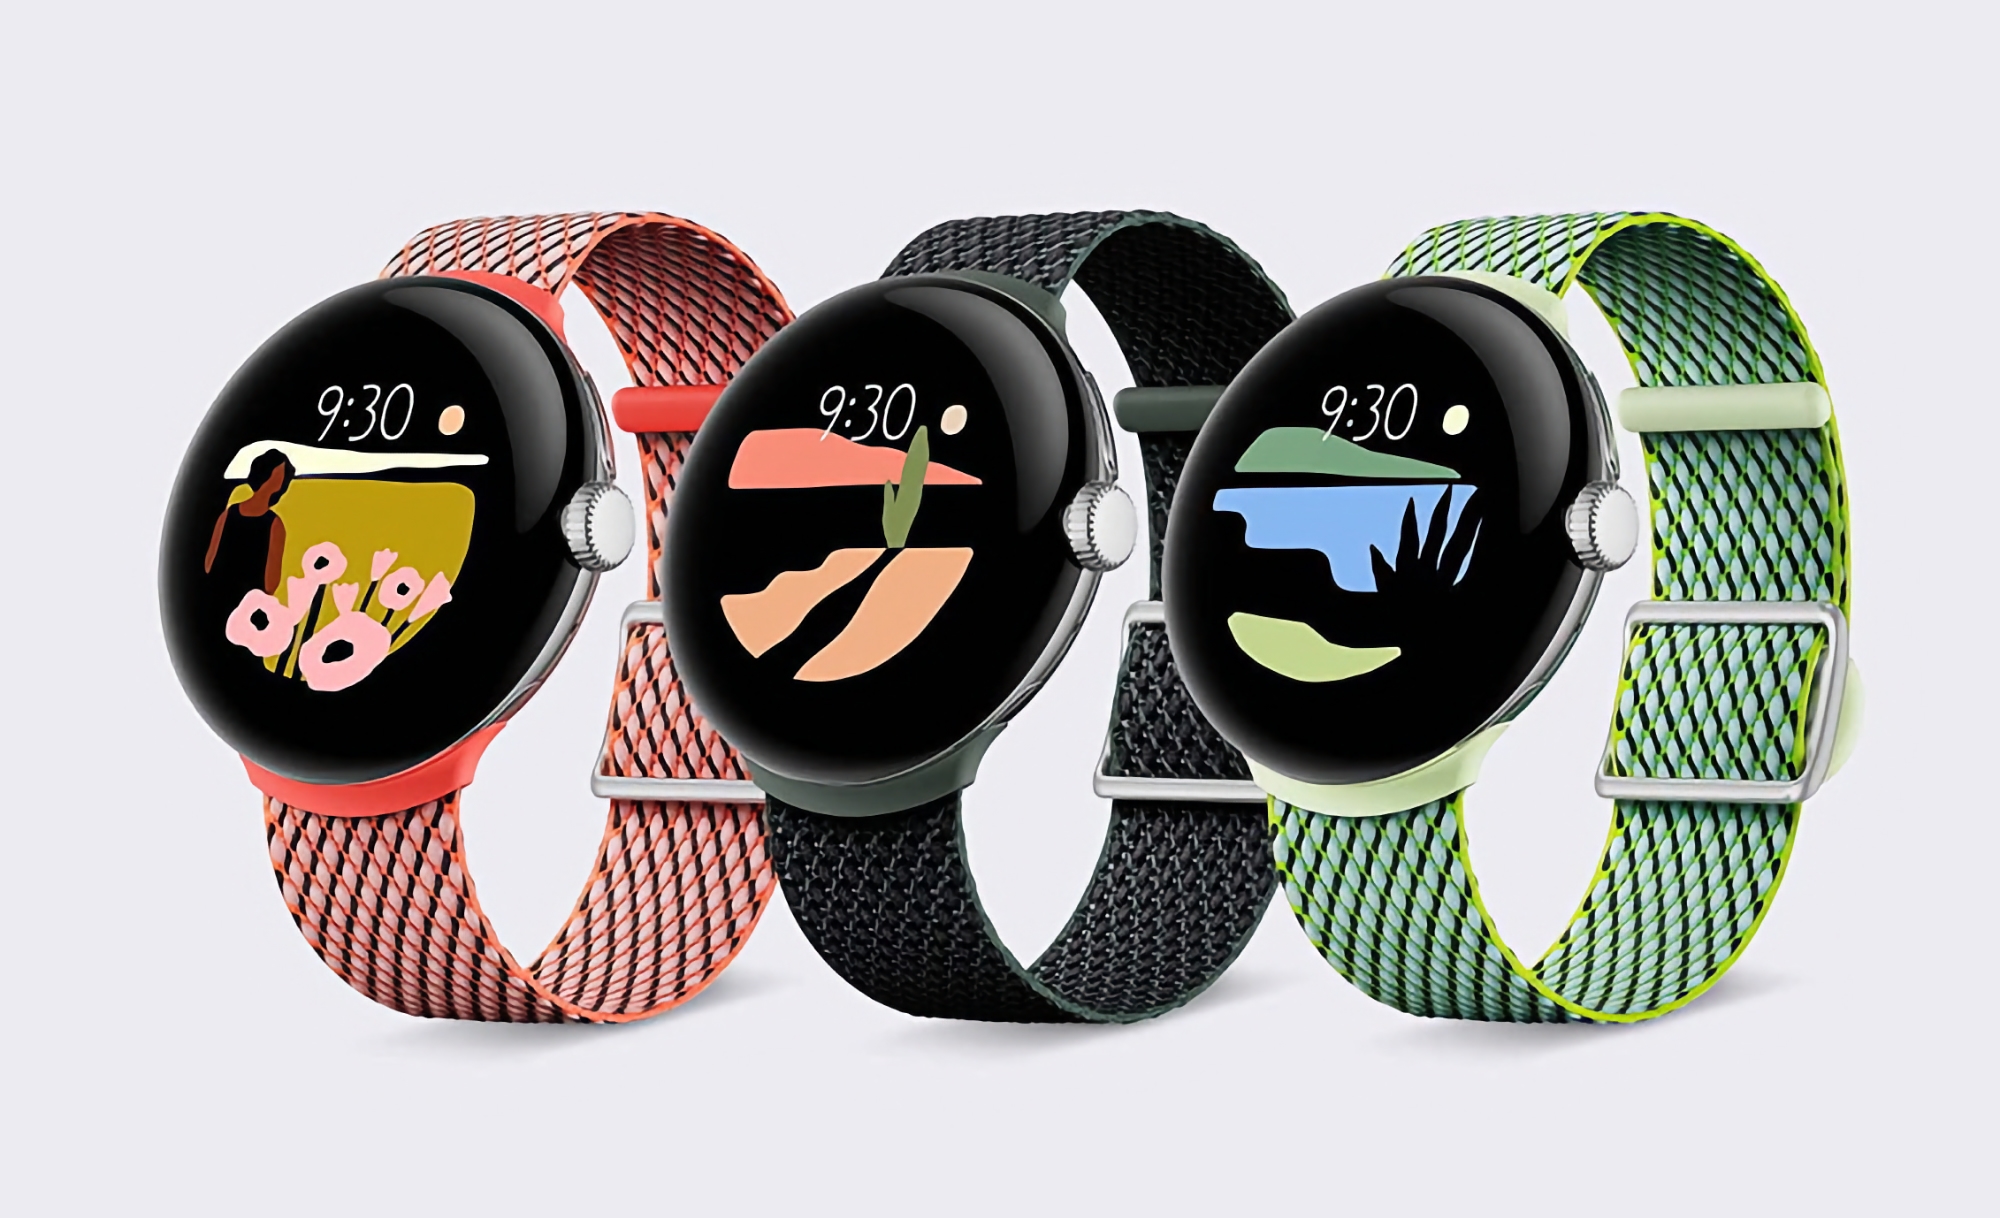 Google Pixel Watch su Amazon: smartwatch con schermo AMOLED rotondo, chip Exynos e Wear OS a bordo con uno sconto di 30 dollari